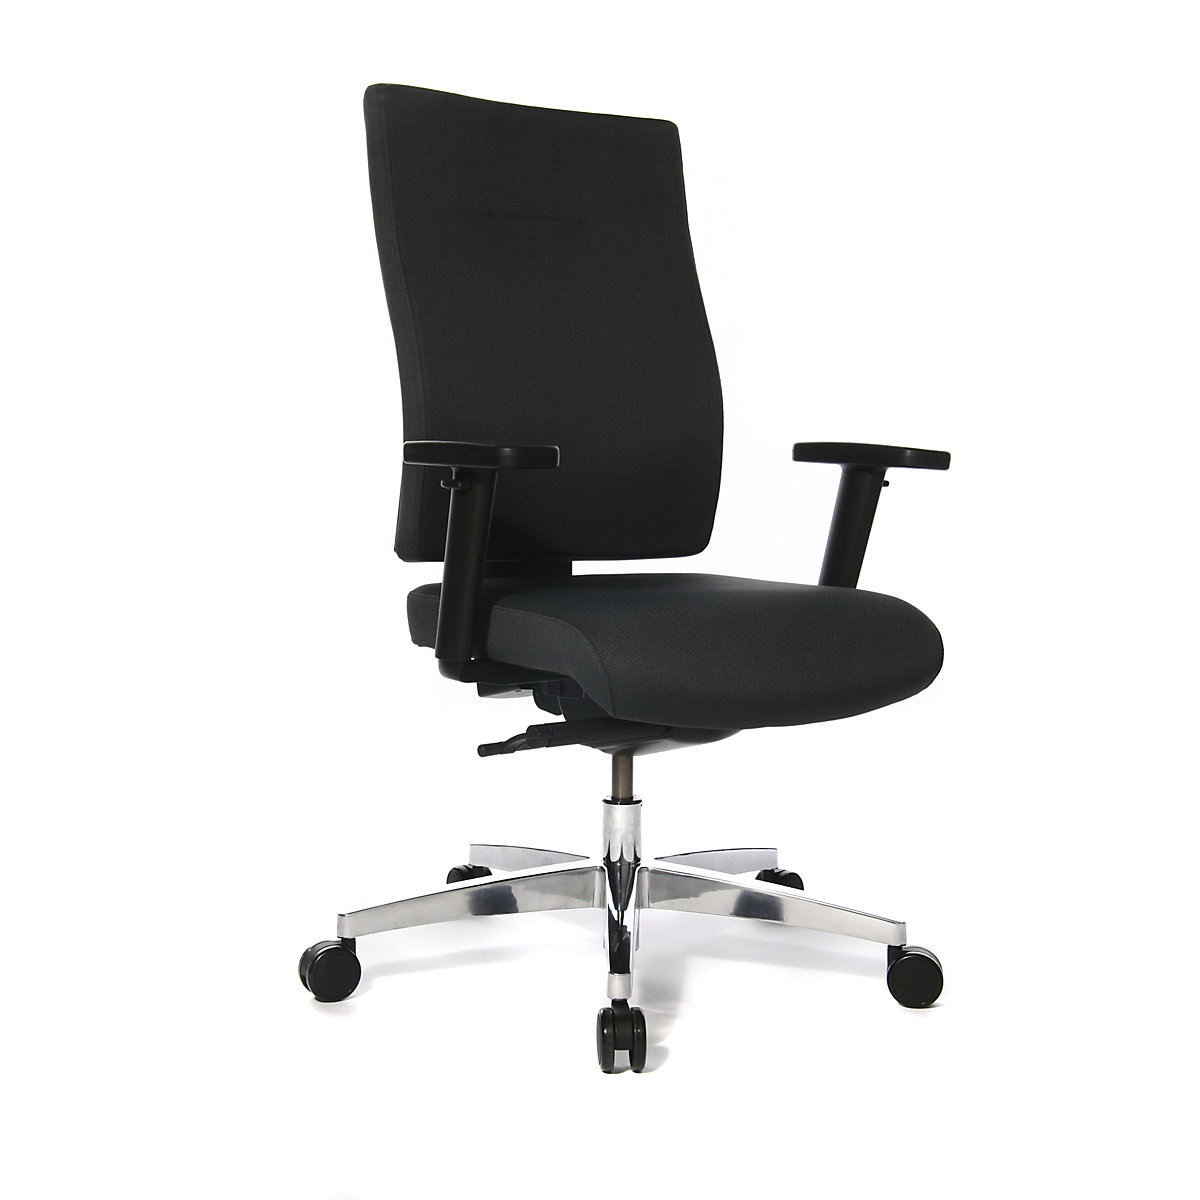 PROFI STAR 15 office swivel chair - Topstar